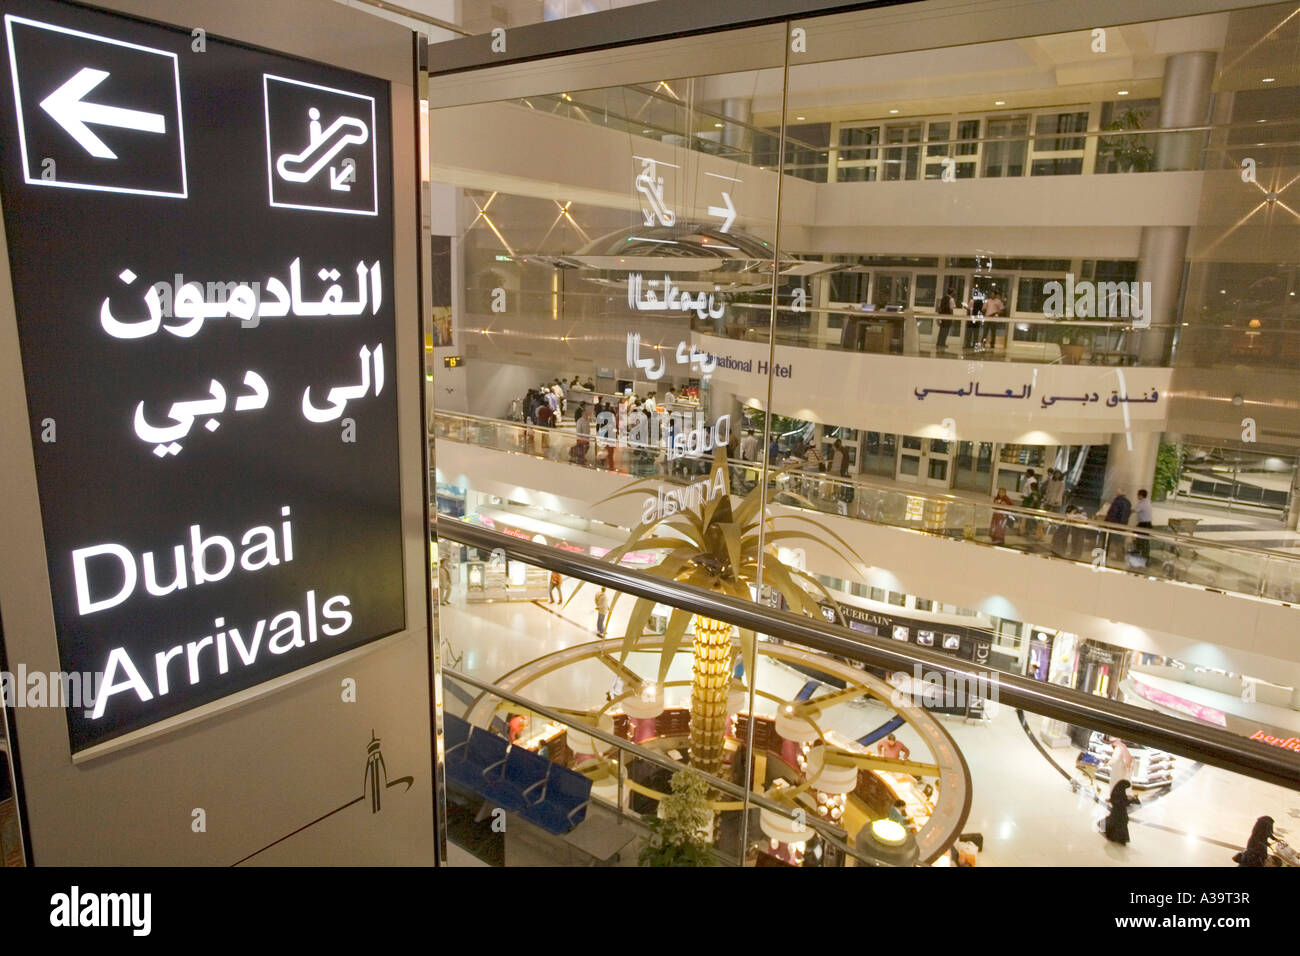 Dubai International Airport Dubai United Arab Emirates Sheik Rashid Terminal duty free shopping zone Dubai arrivals sign Stock Photo